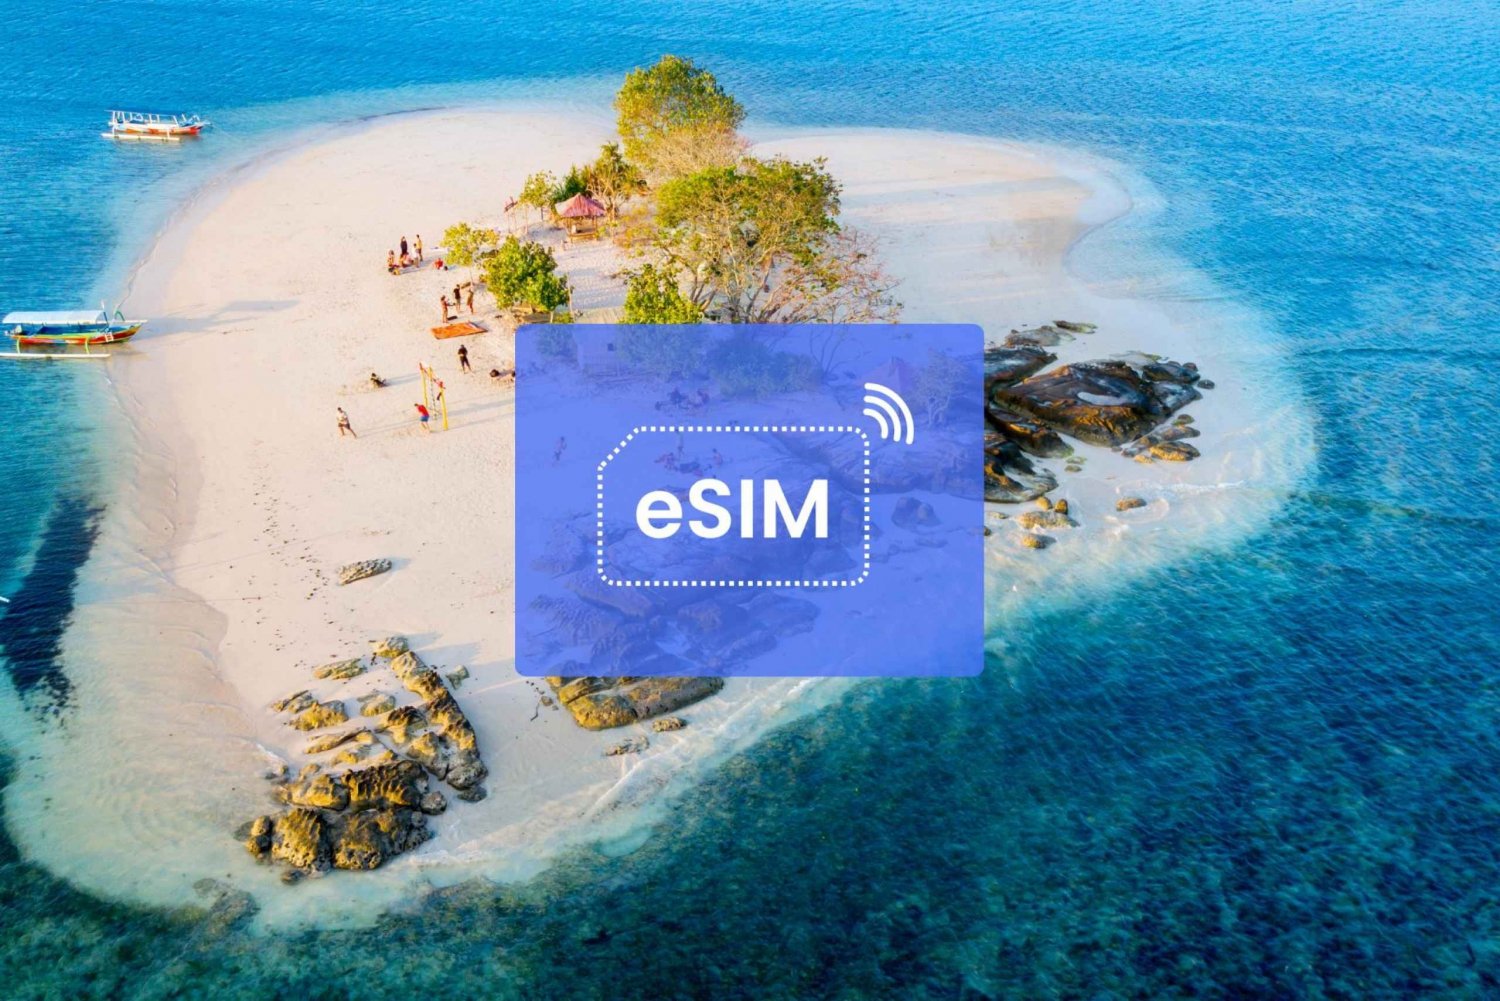 Bali: Indonesia eSIM Roaming Mobile Data Plan